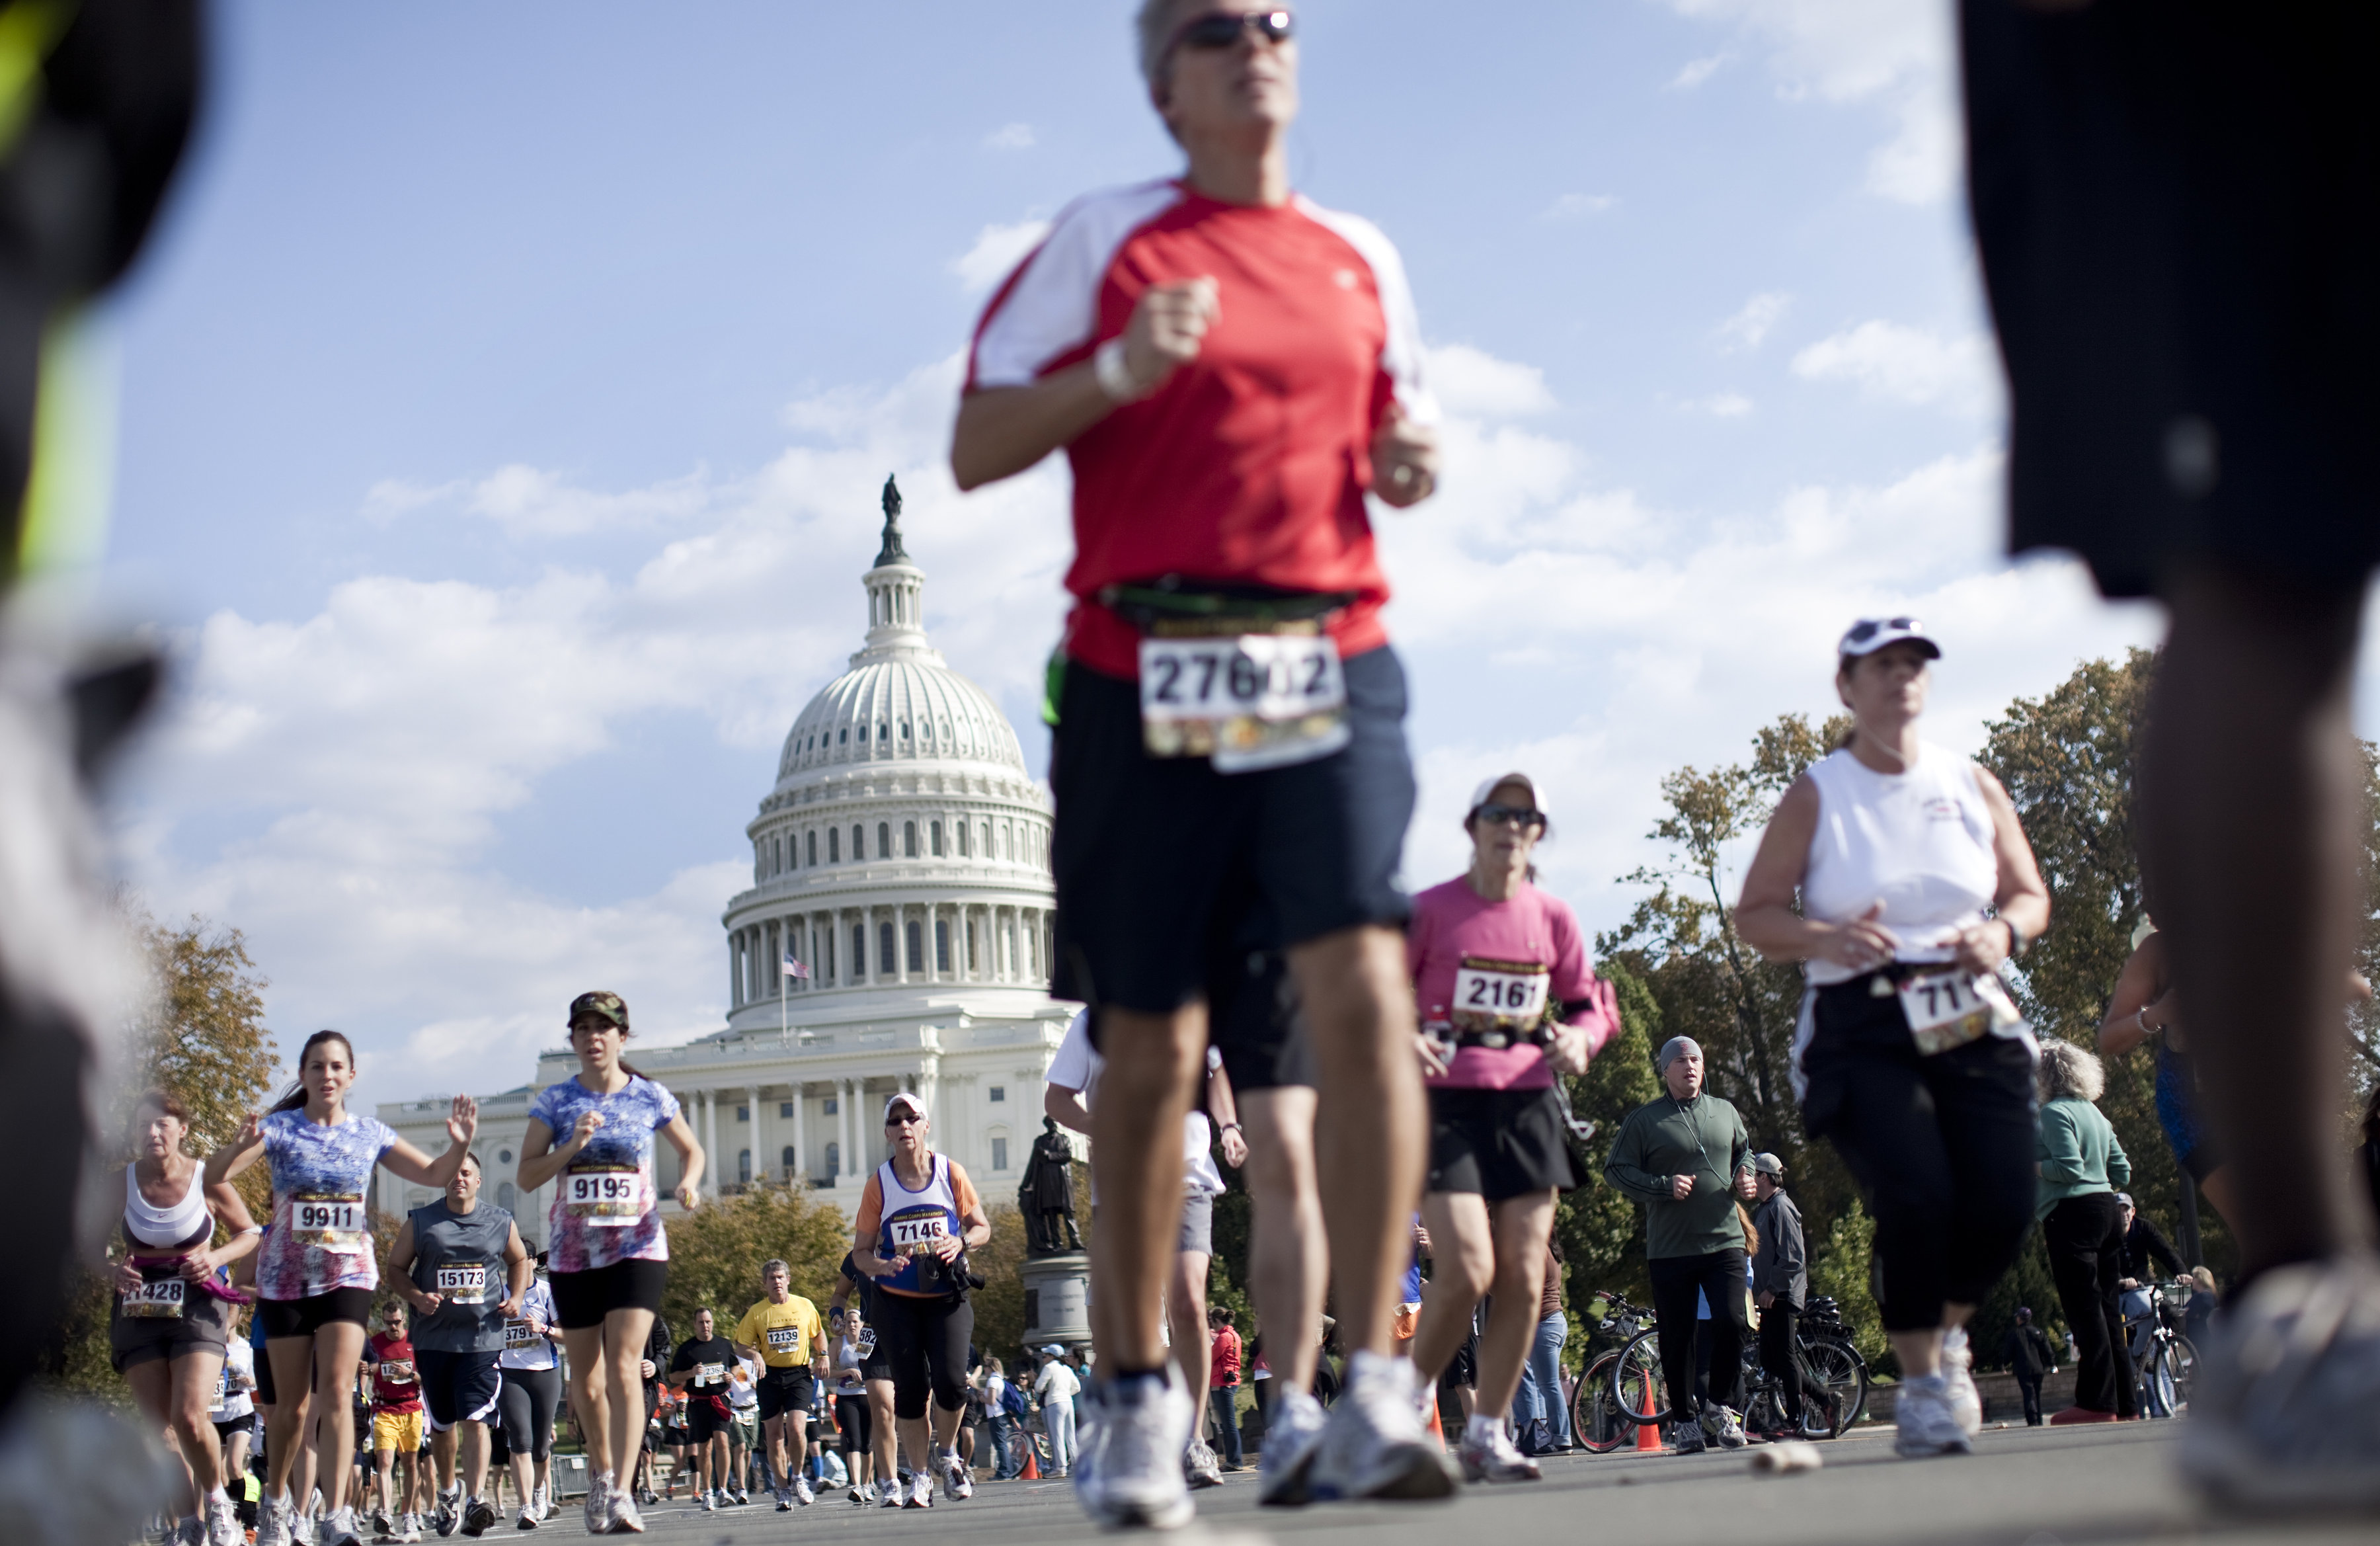 Marine Corps Marathon registration opens for military